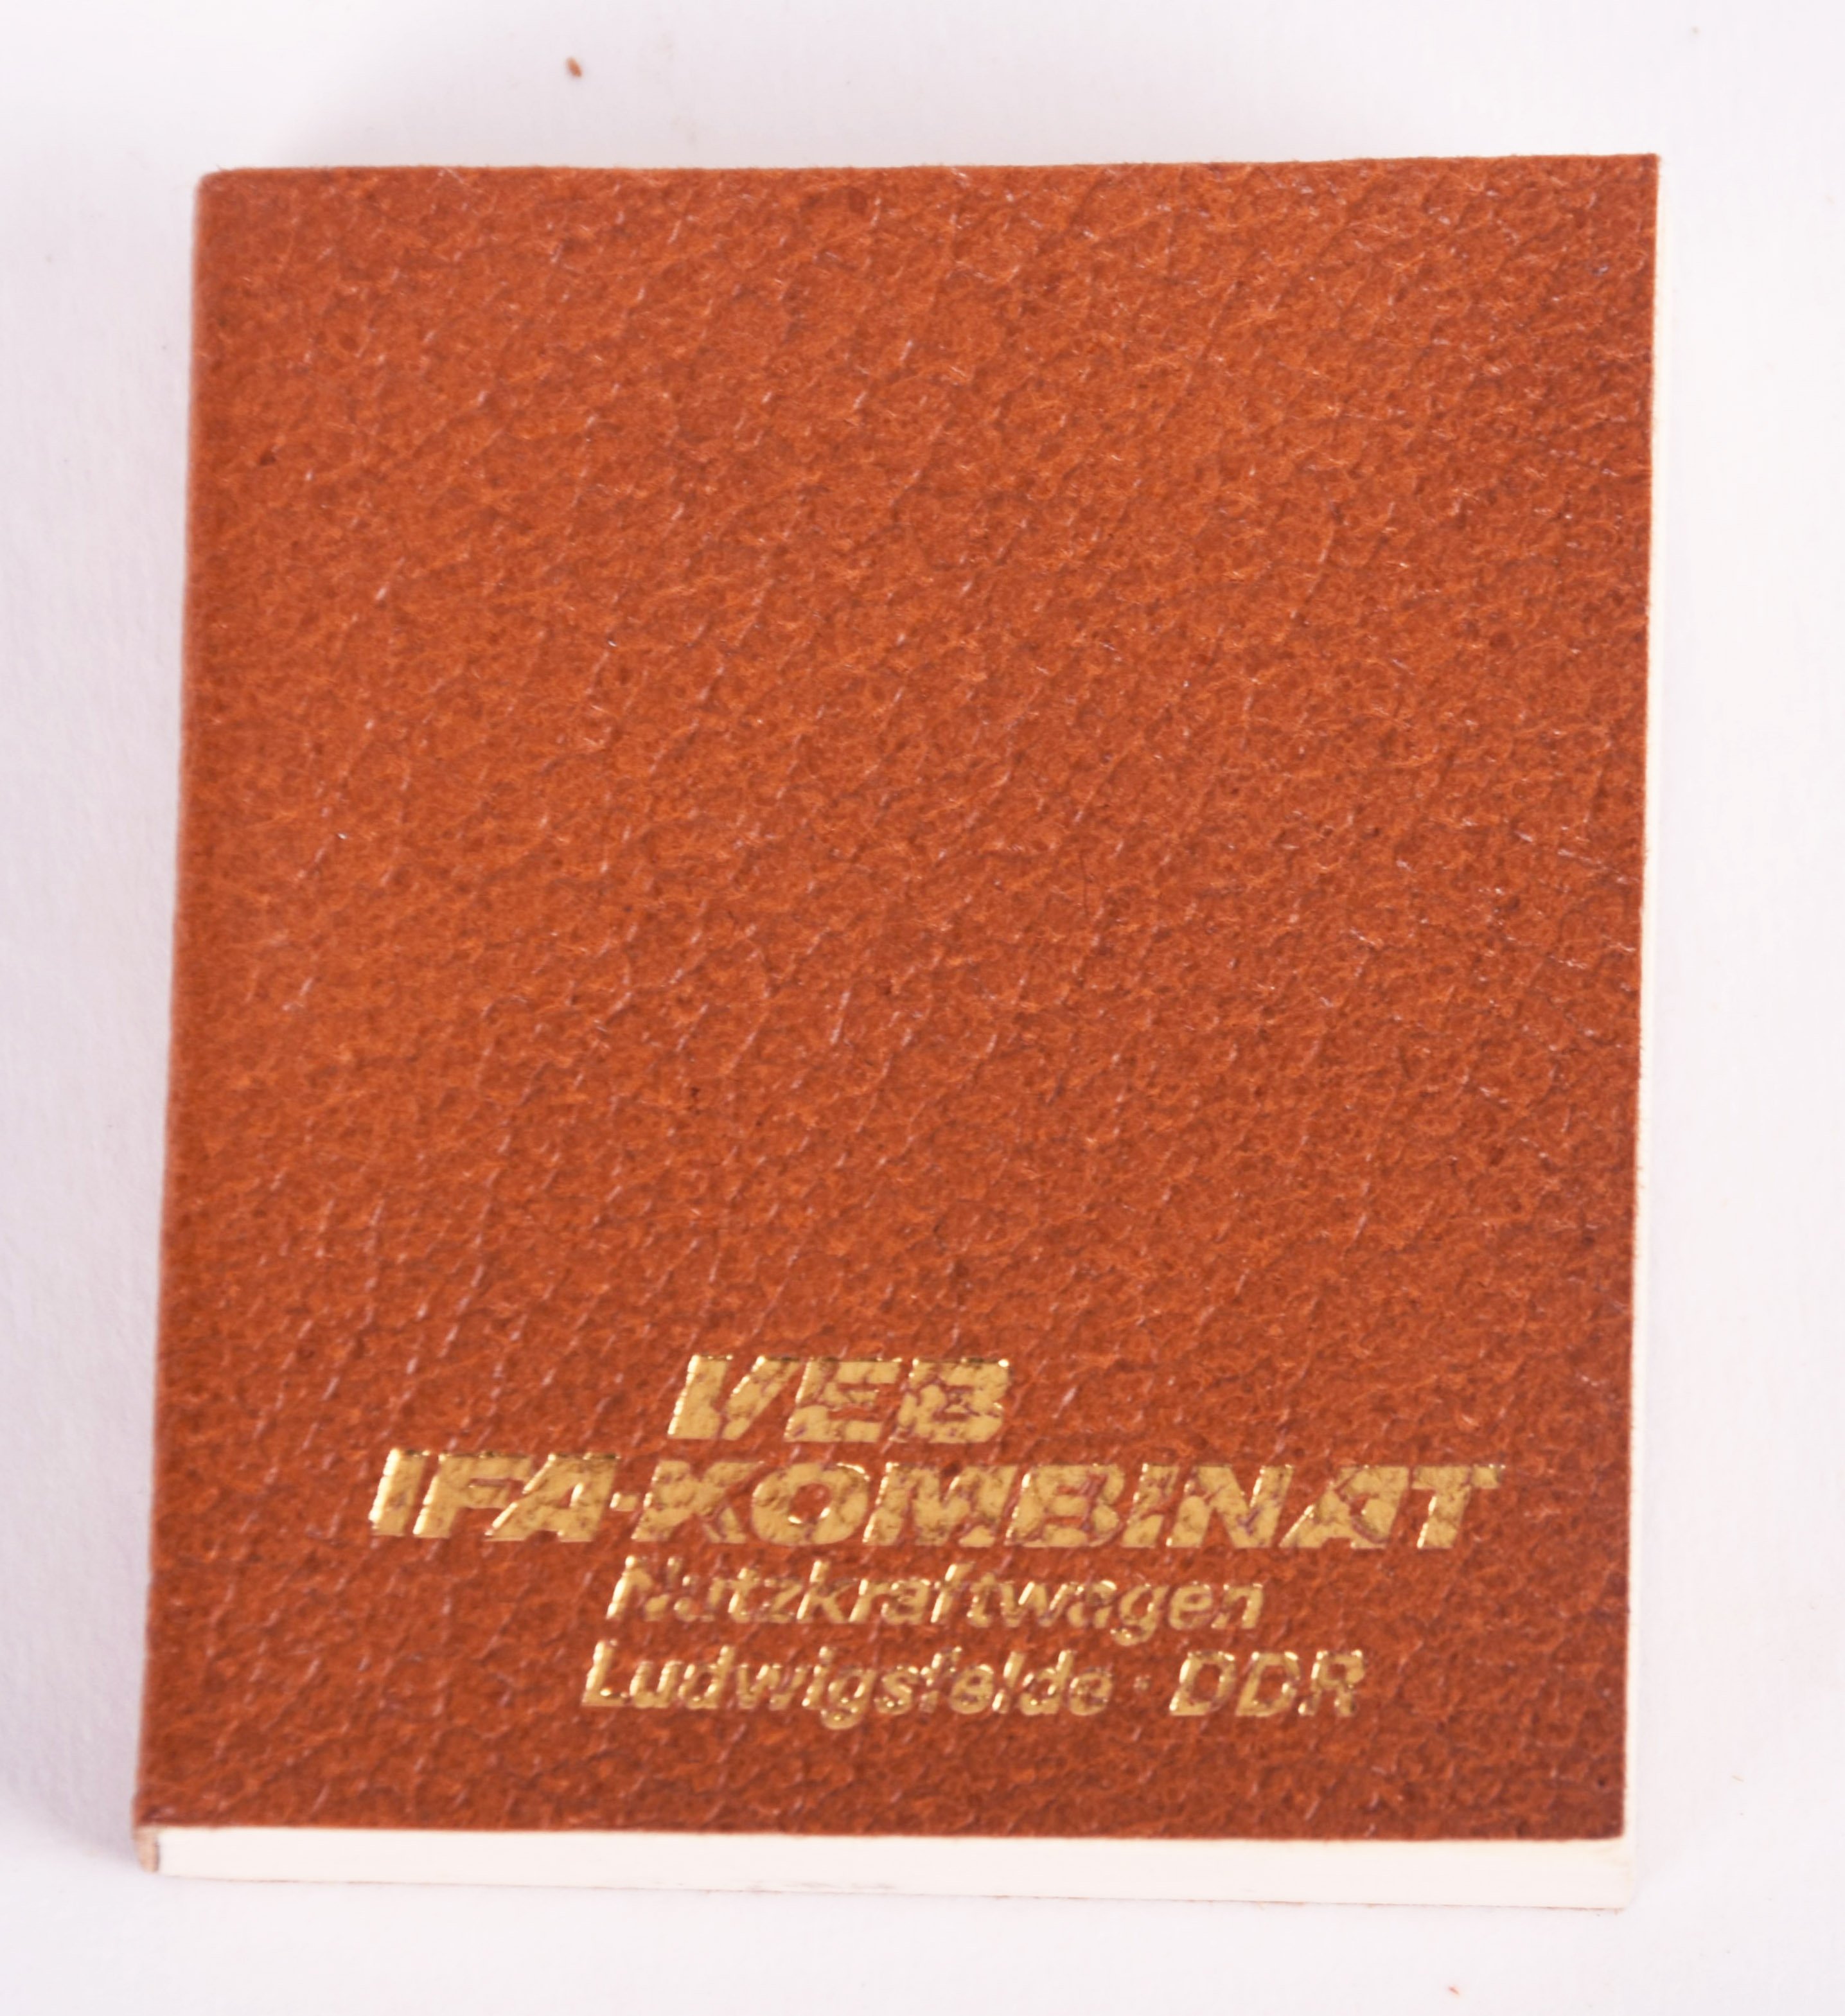 Notizbuch "VEB IFA-Kombinat NKW Ludwigsfelde" (braun) (Museum für Stadt und Technik Ludwigsfelde CC BY-NC-SA)